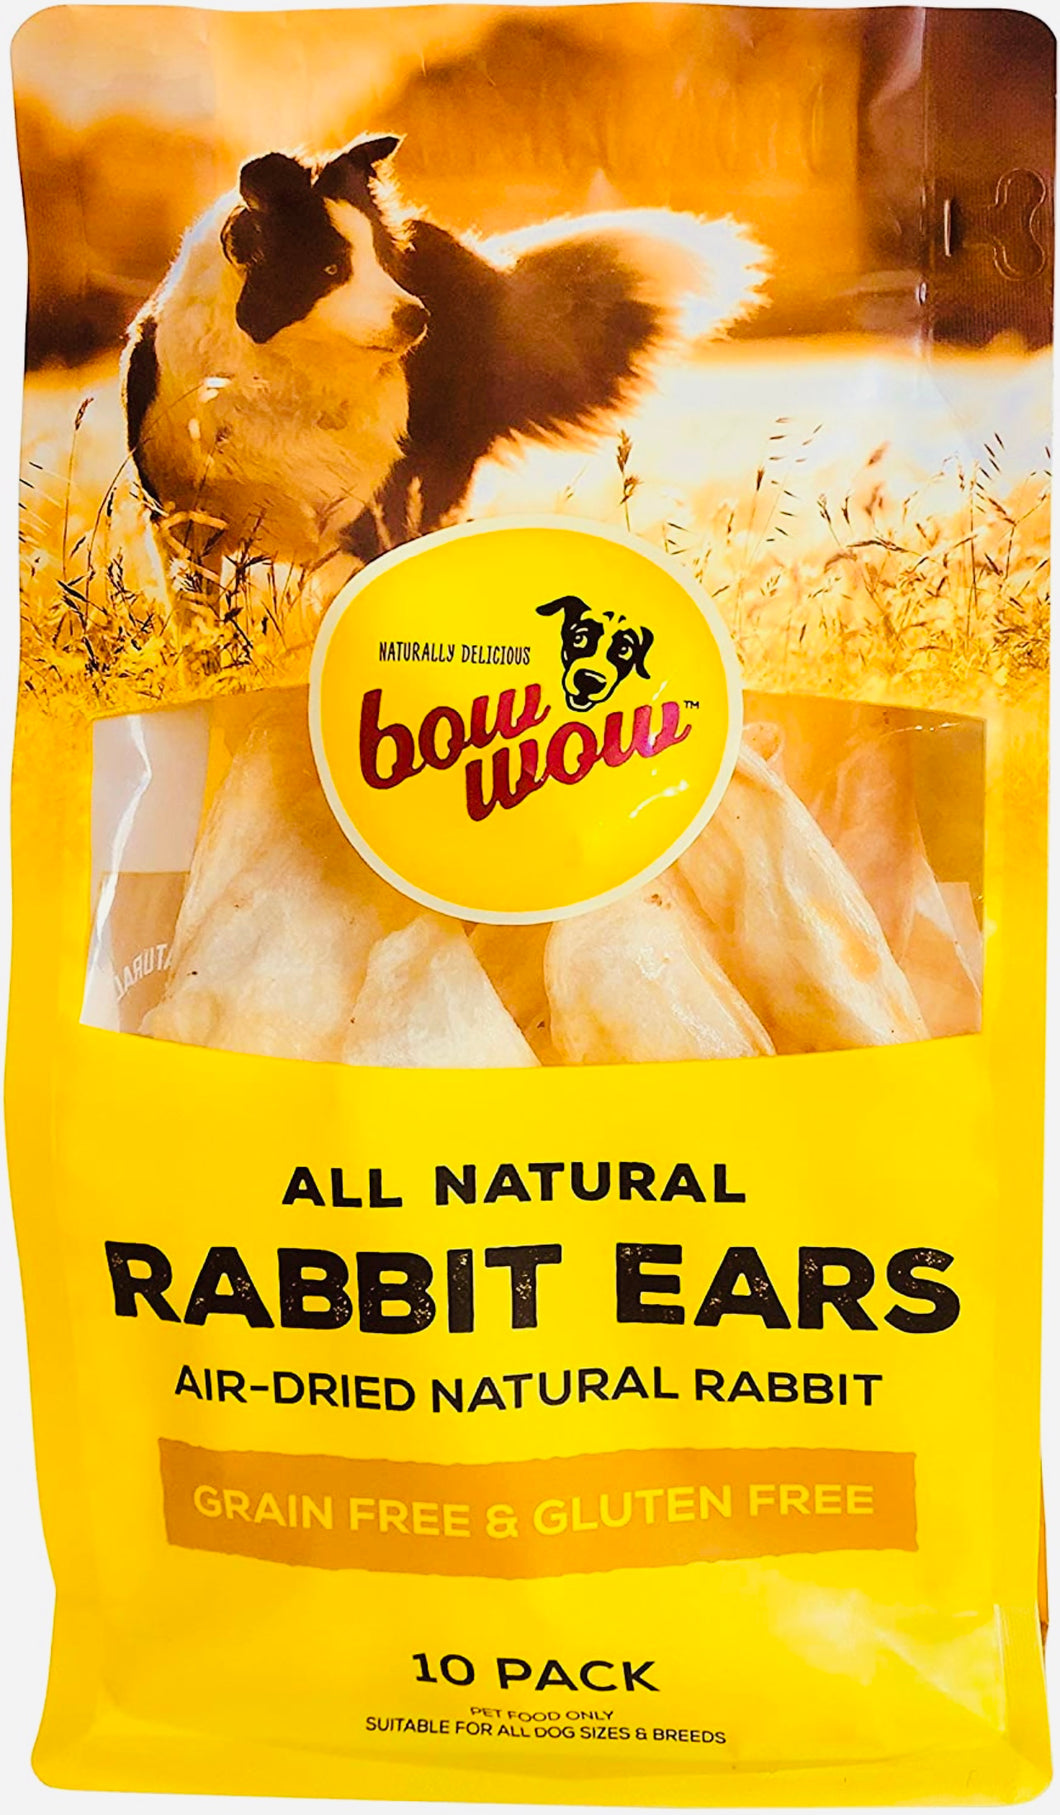 Rabbit ears dog treats bow wow 10 pack